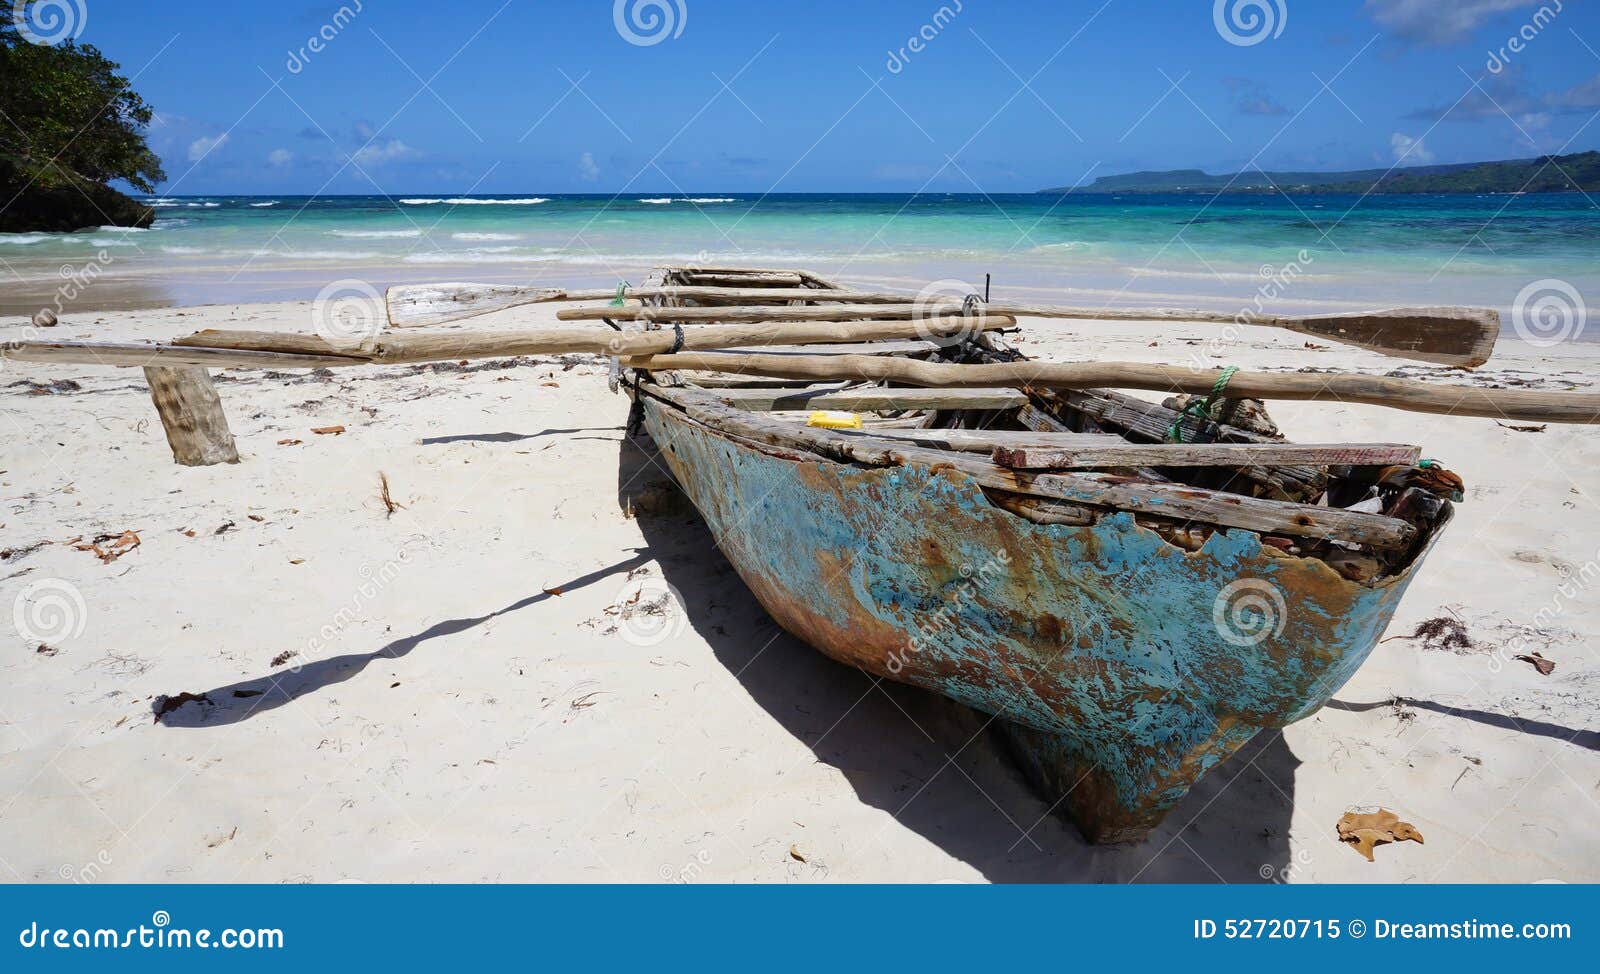 decaying rowing boat on beach at playa rincÃÂ³n